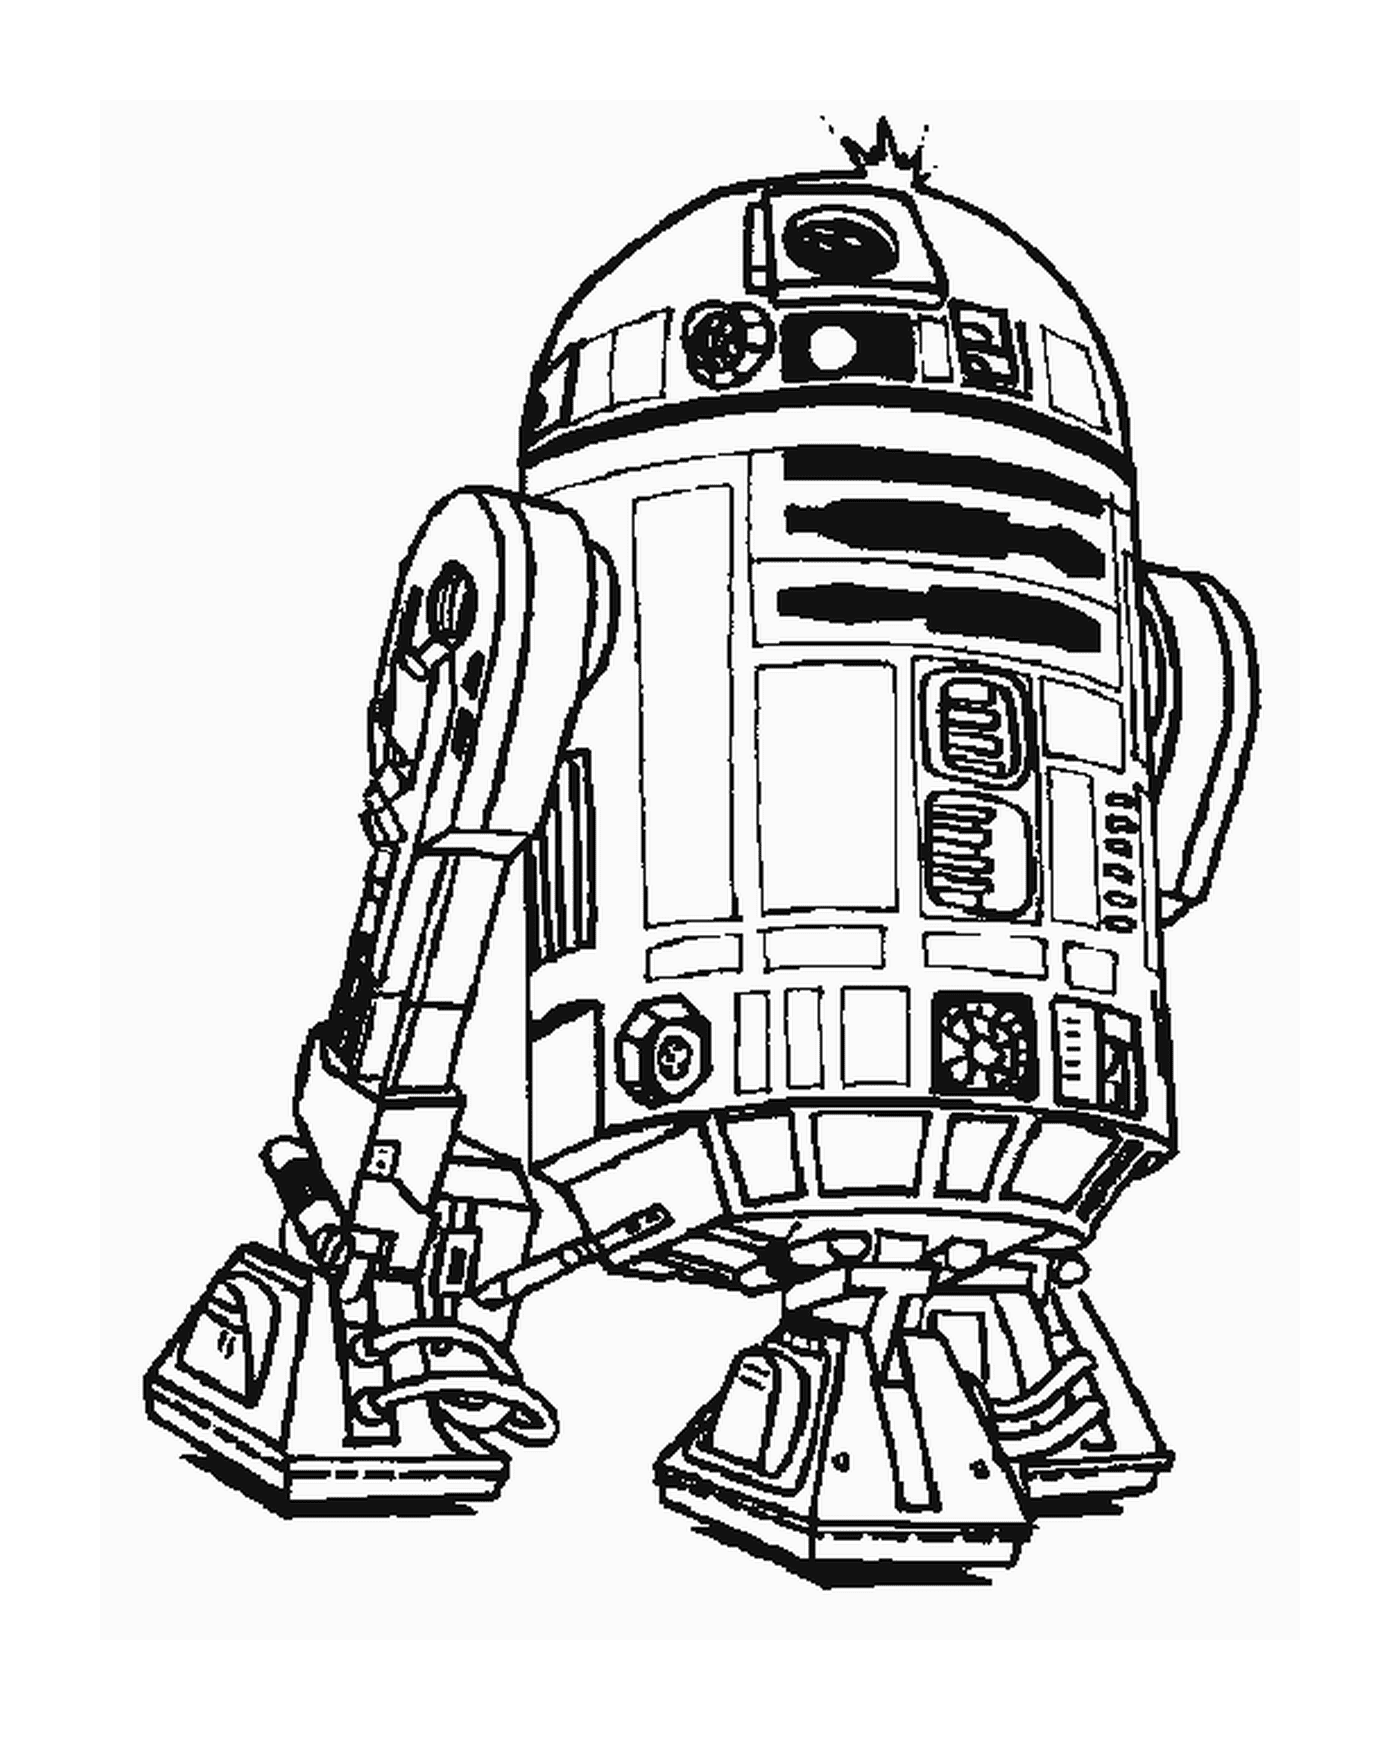  R2-D2 机器人的绘图 